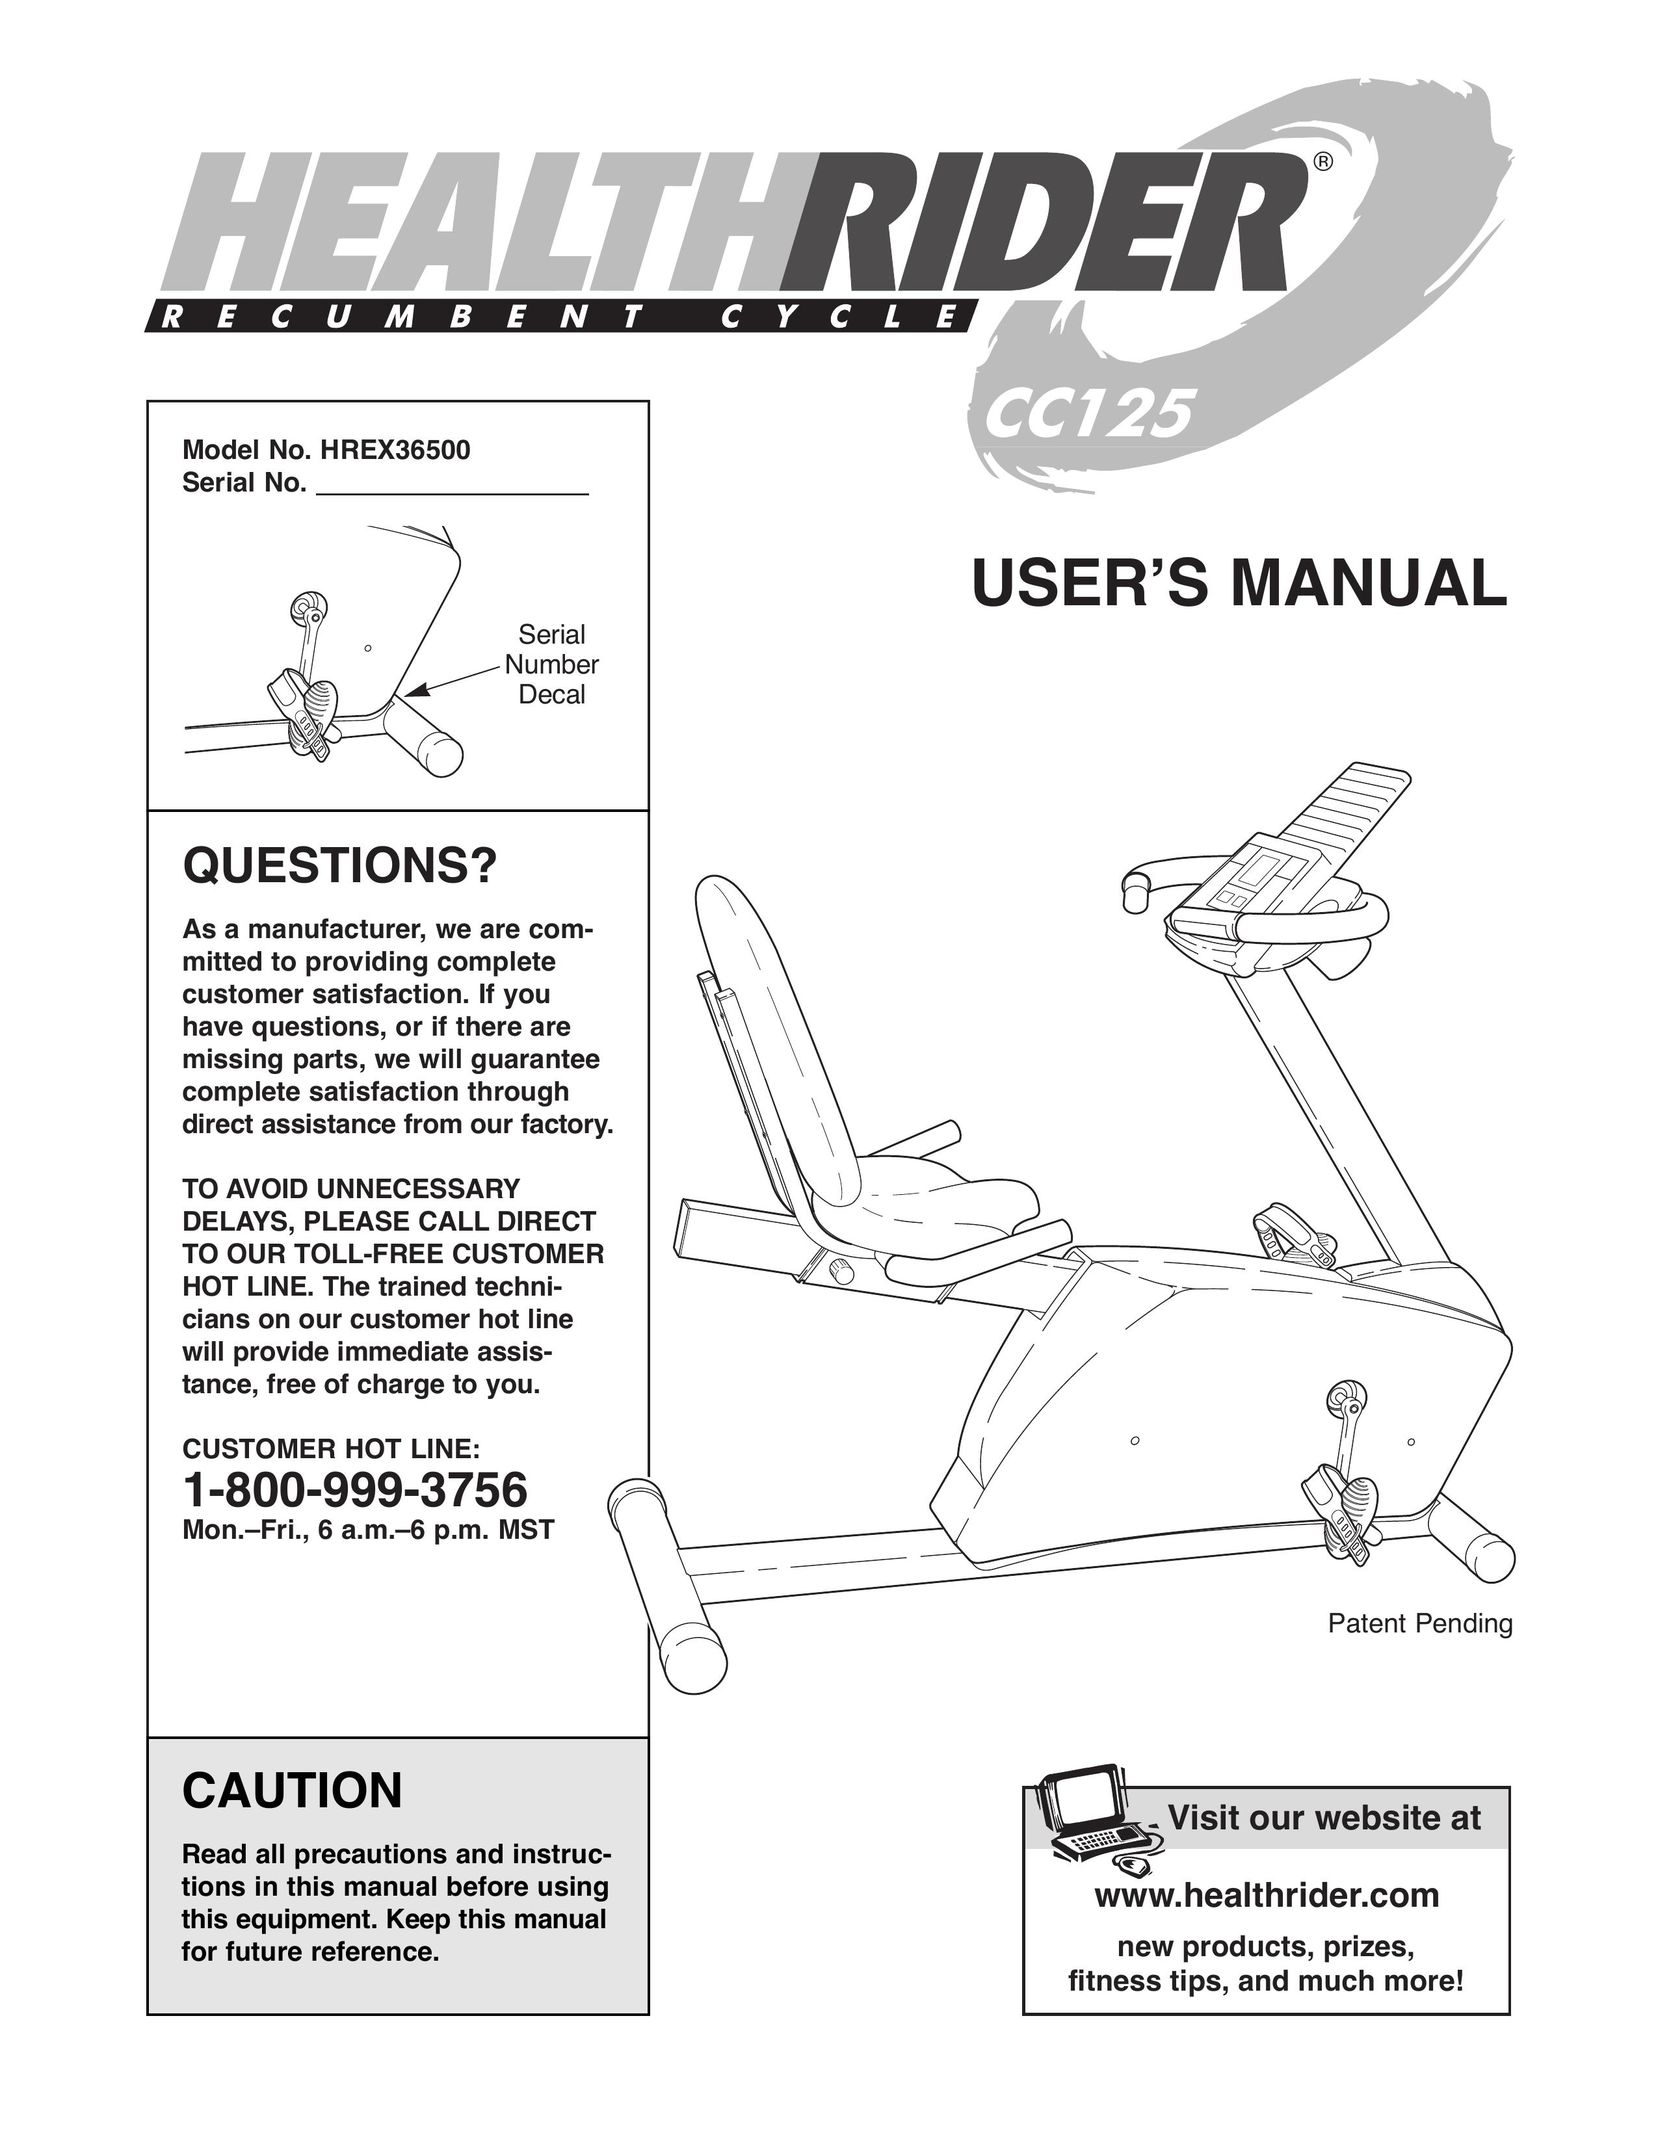 Healthrider HREX36500 Home Gym User Manual